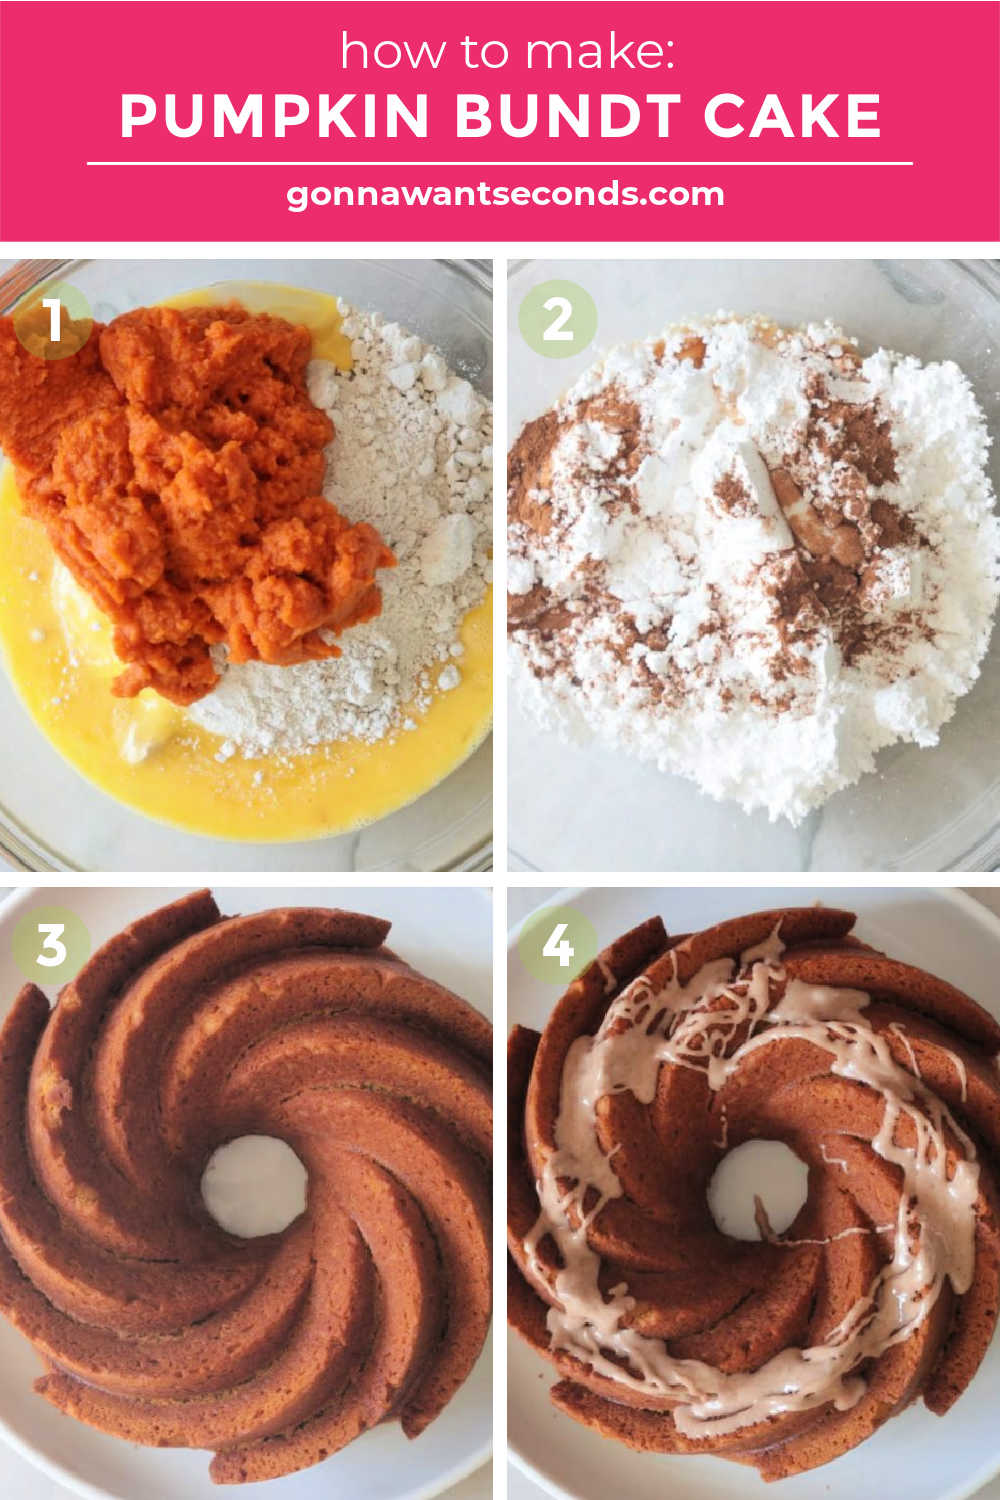 Step by step how to make pumpkin bundt cake